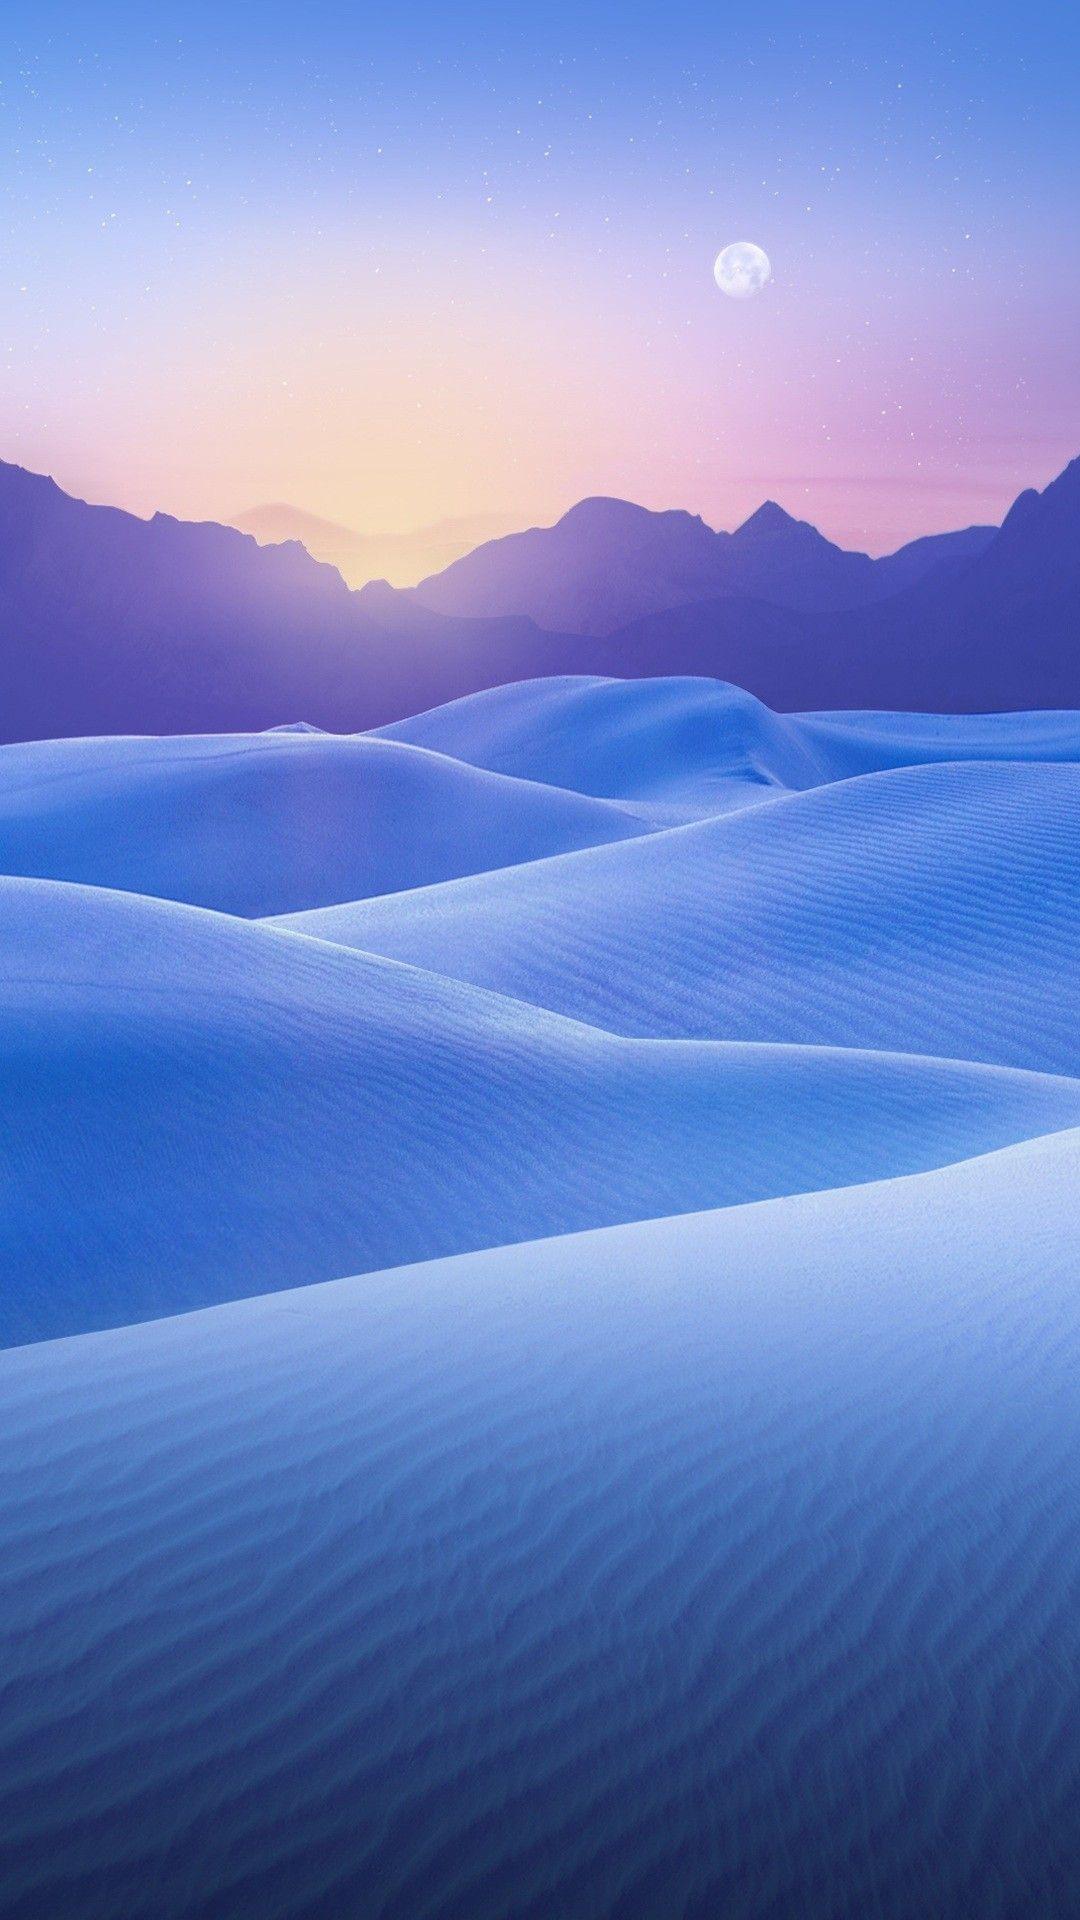 blue desert sunset iPhone 6 plus wallpaper, stars, moon